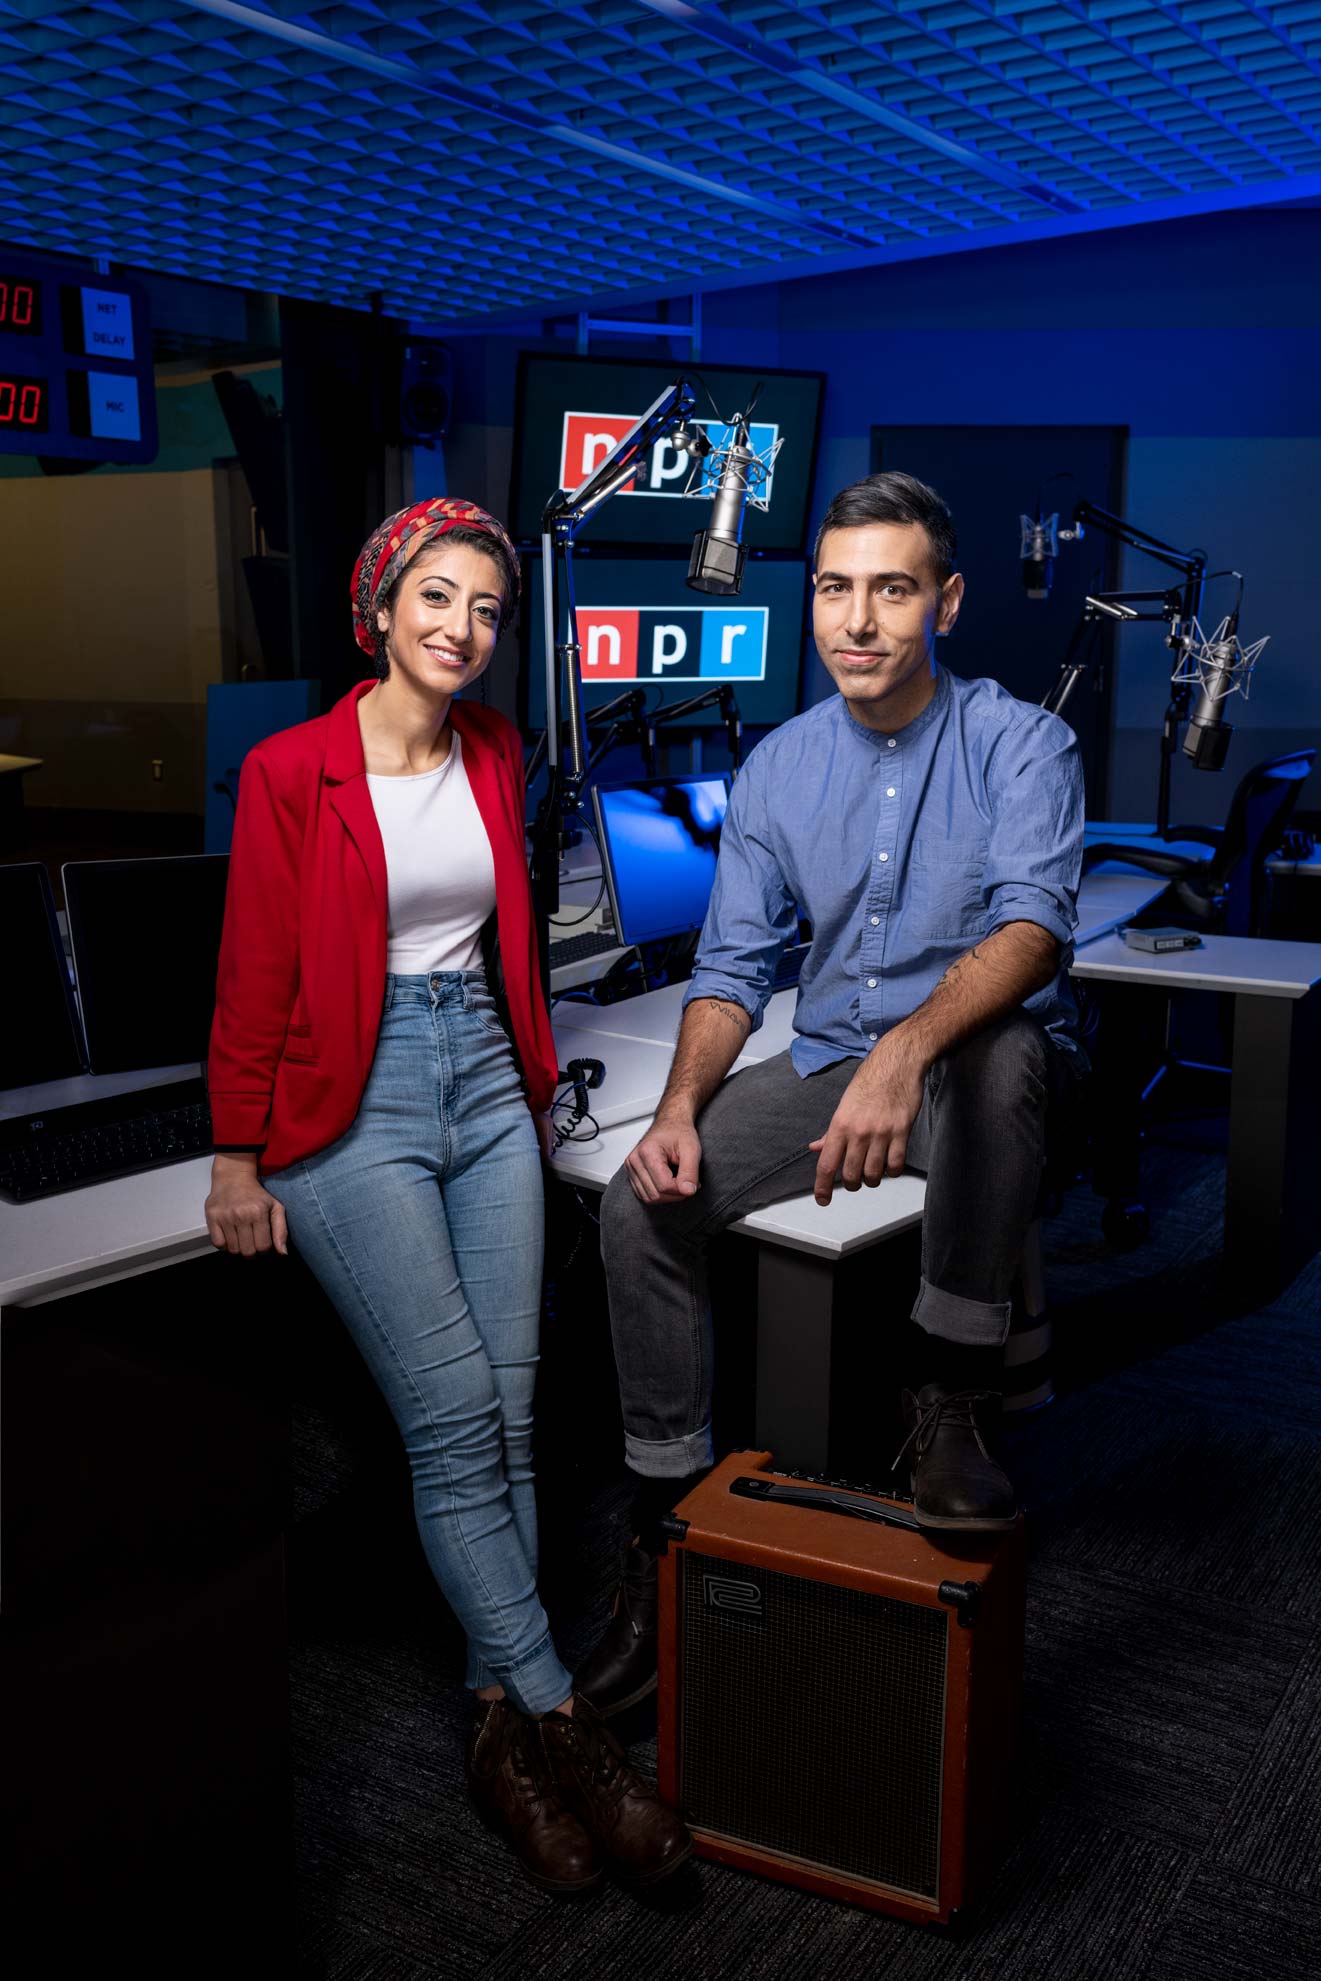 Rund Abdelfatah and Ramtin Arablouei in a radio recording studio with a blue background at NPR